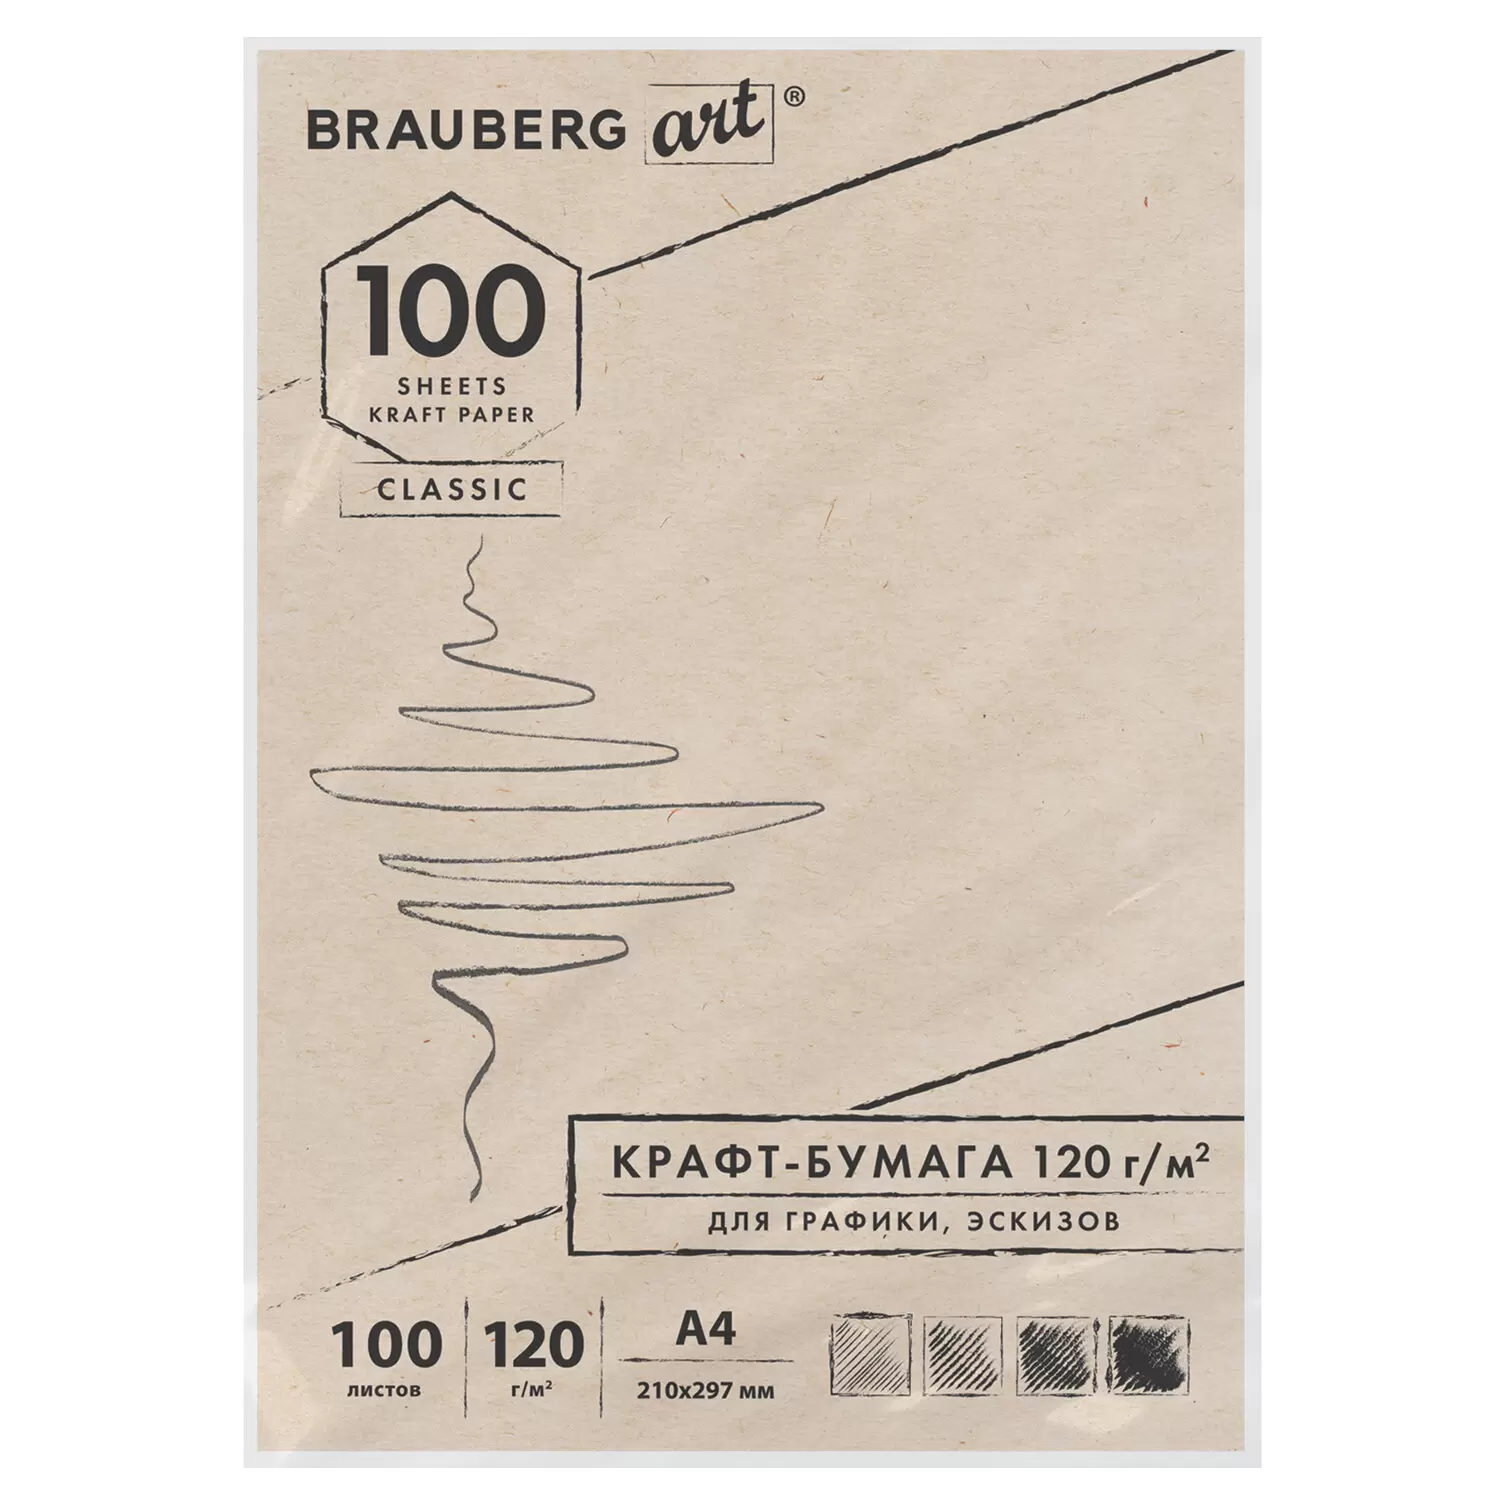 Крафт-бумага для графики, эскизов А4 (210х297 мм), 120 г/м2, 100 л., BRAUBERG ART CLASSIC, 112486¶